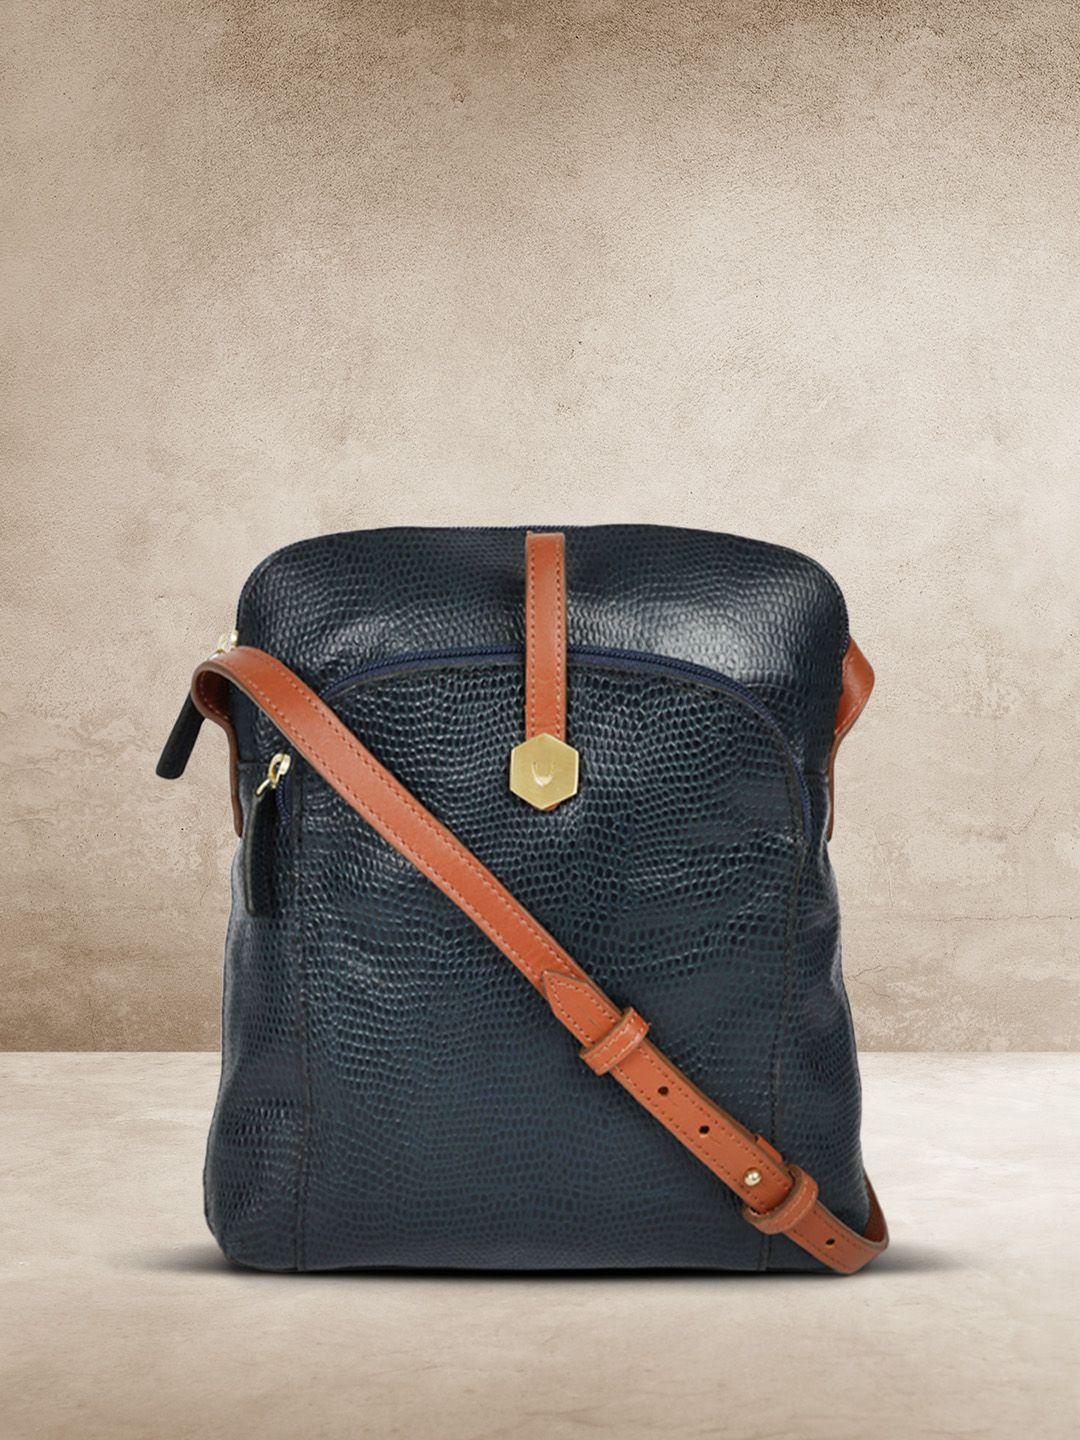 hidesign navy blue animal textured mensa 02 leather sling bag